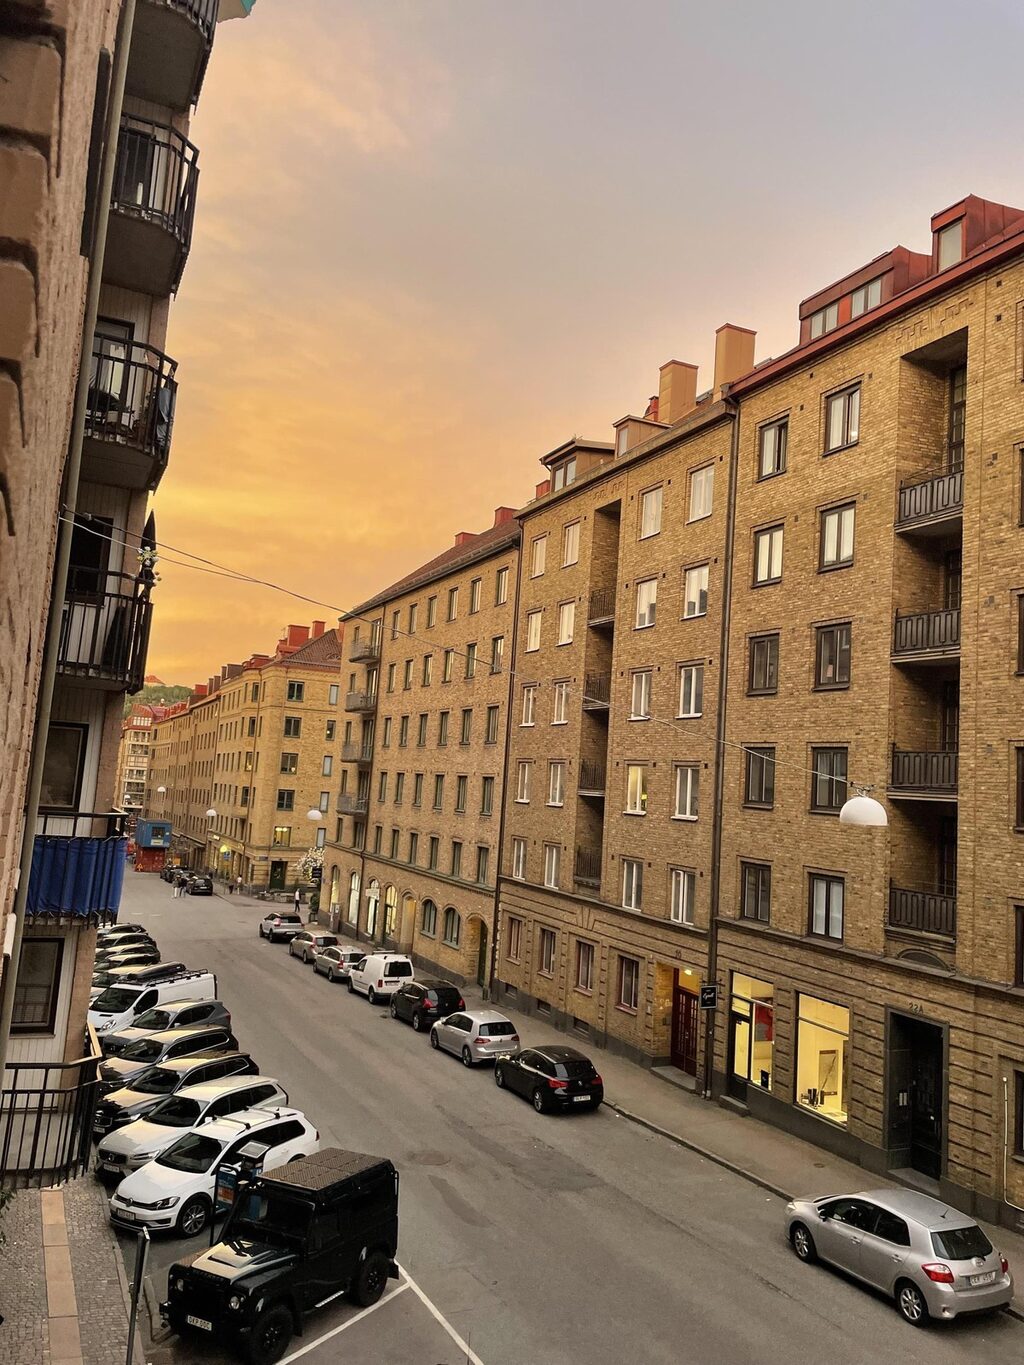 Lägenhetsbyte - Olivedalsgatan 27, 413 10 Göteborg